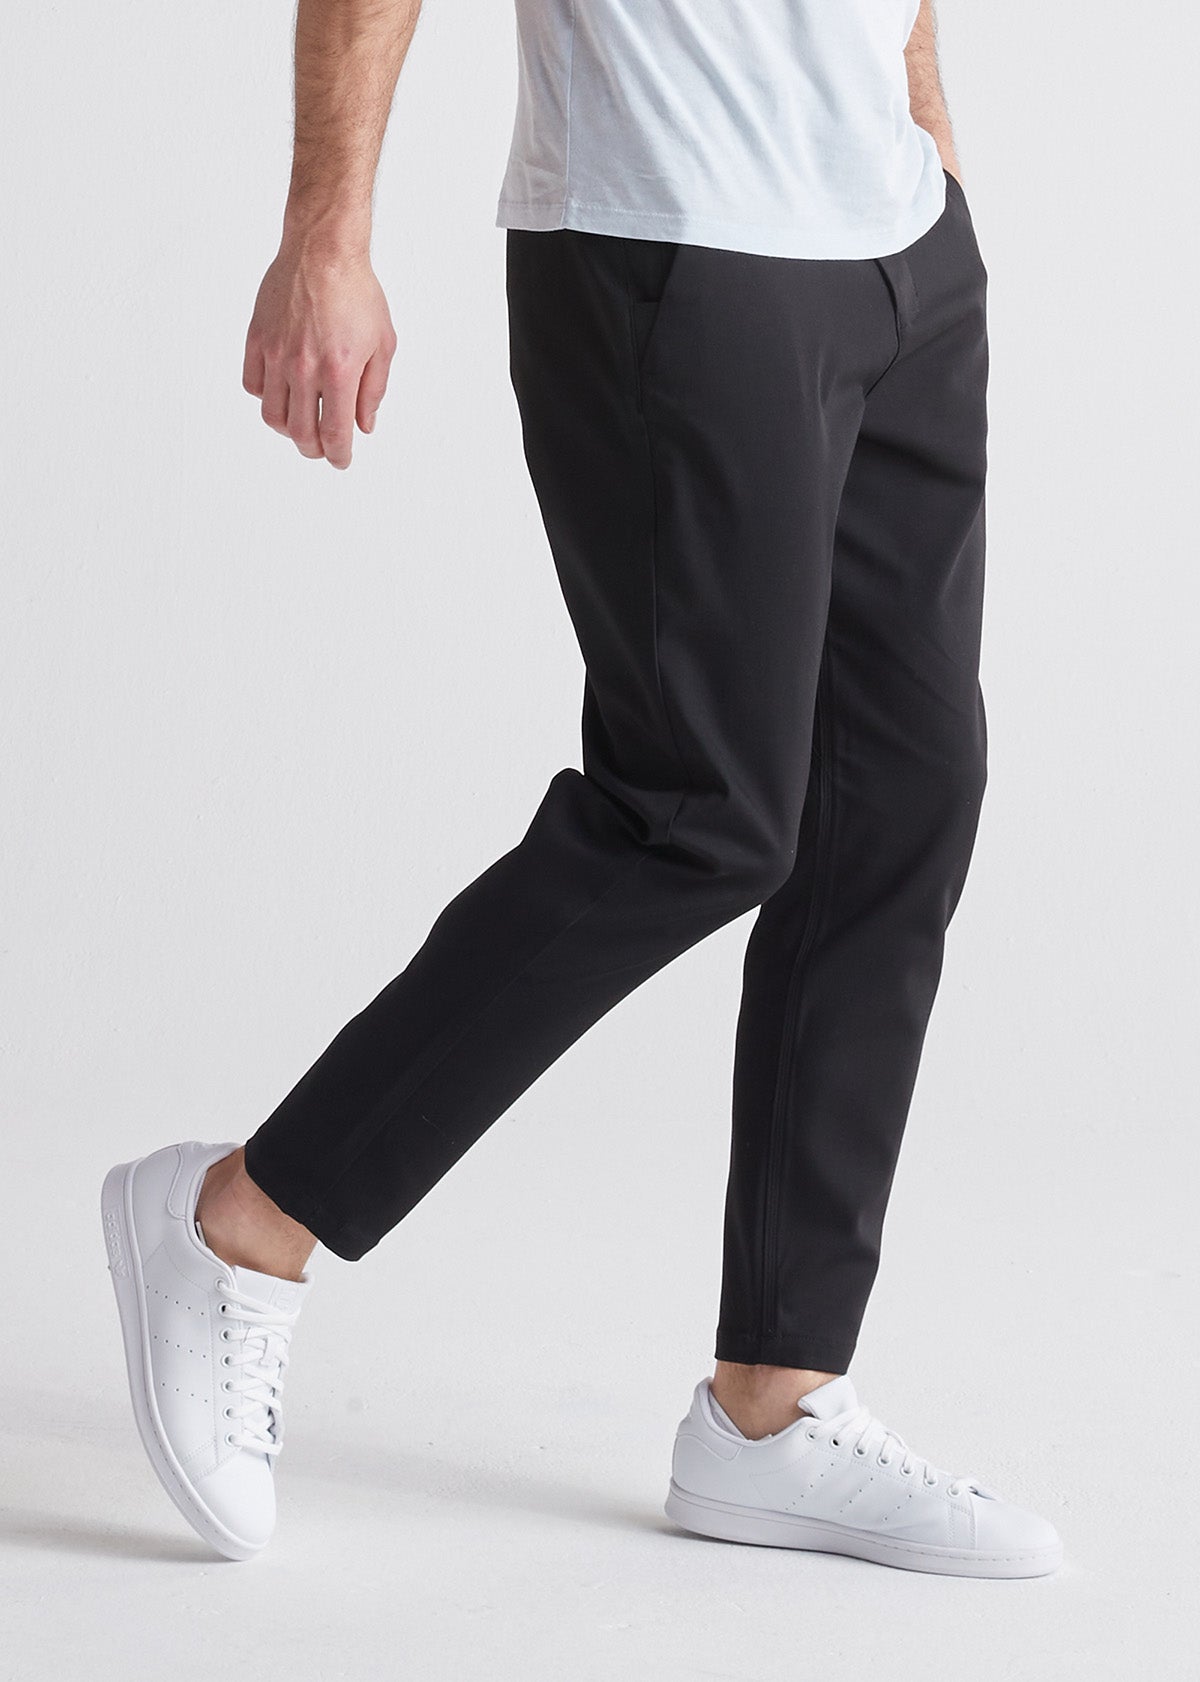 302] Men Formal Business slack Pants Slim Fit Straight Flexible office pants